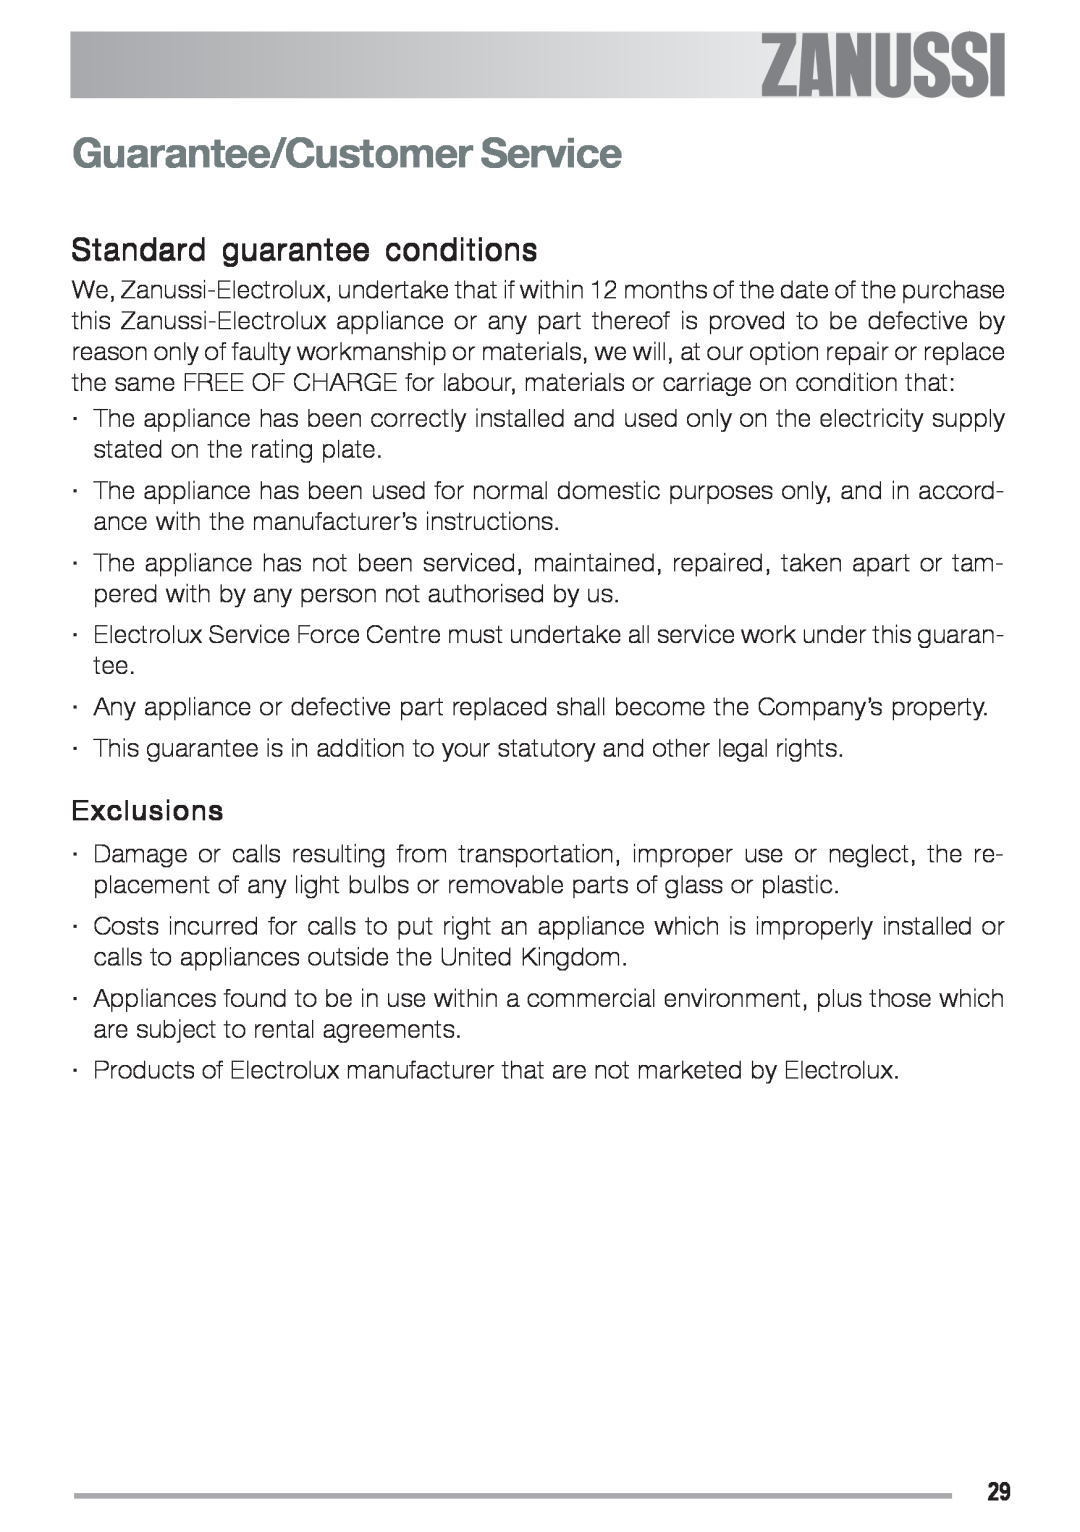 Zanussi ZGS 682 ICT manual Standard guarantee conditions, Guarantee/Customer Service 